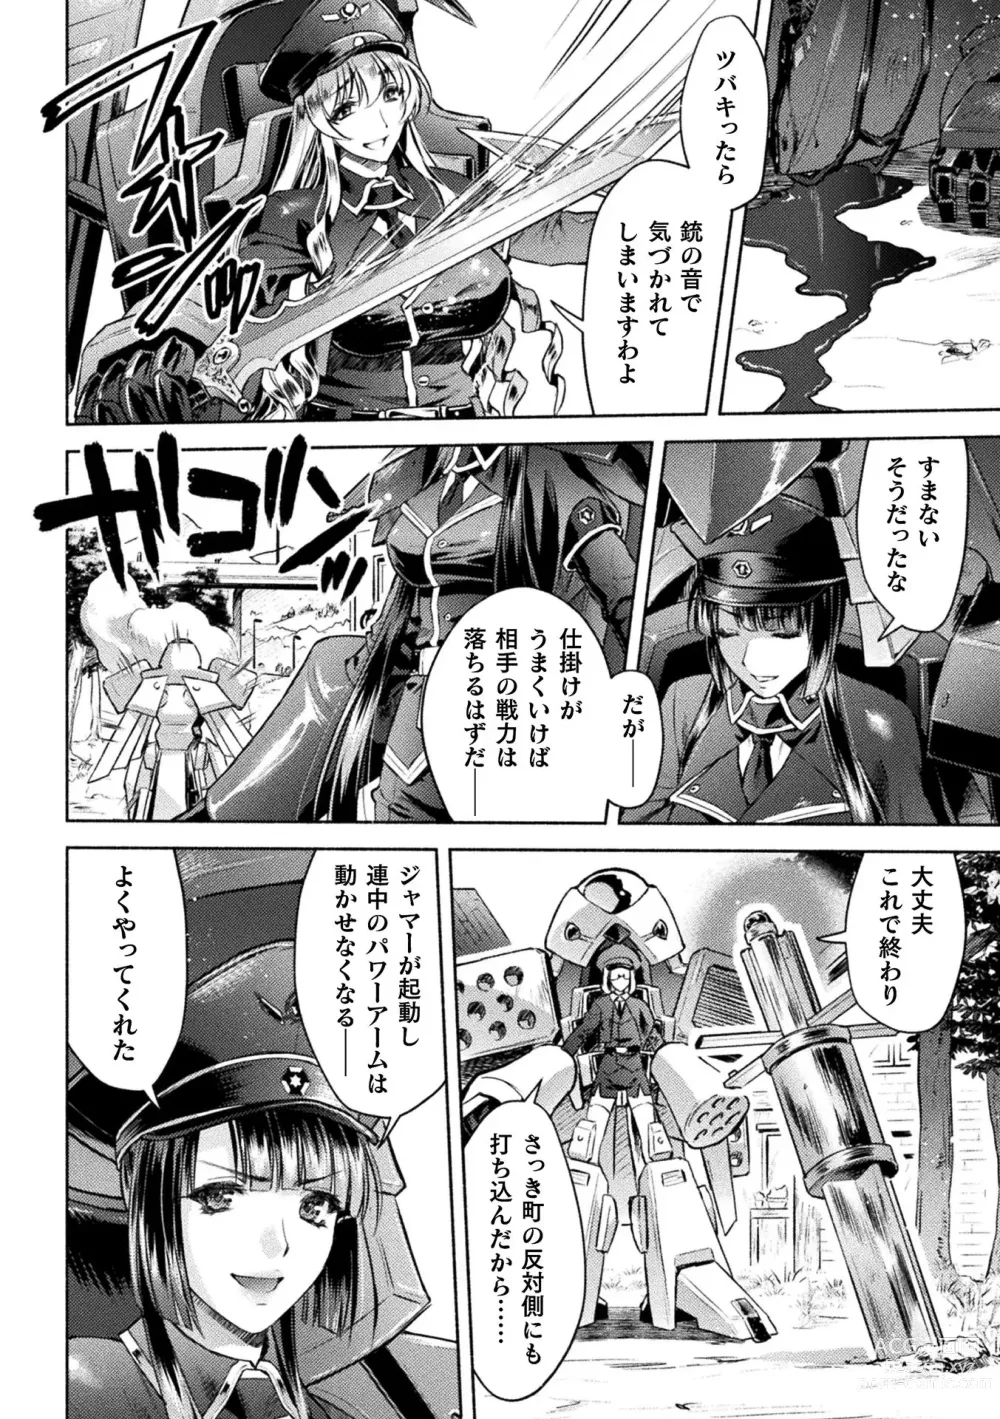 Page 6 of manga Kukkoro Heroines Vol. 34